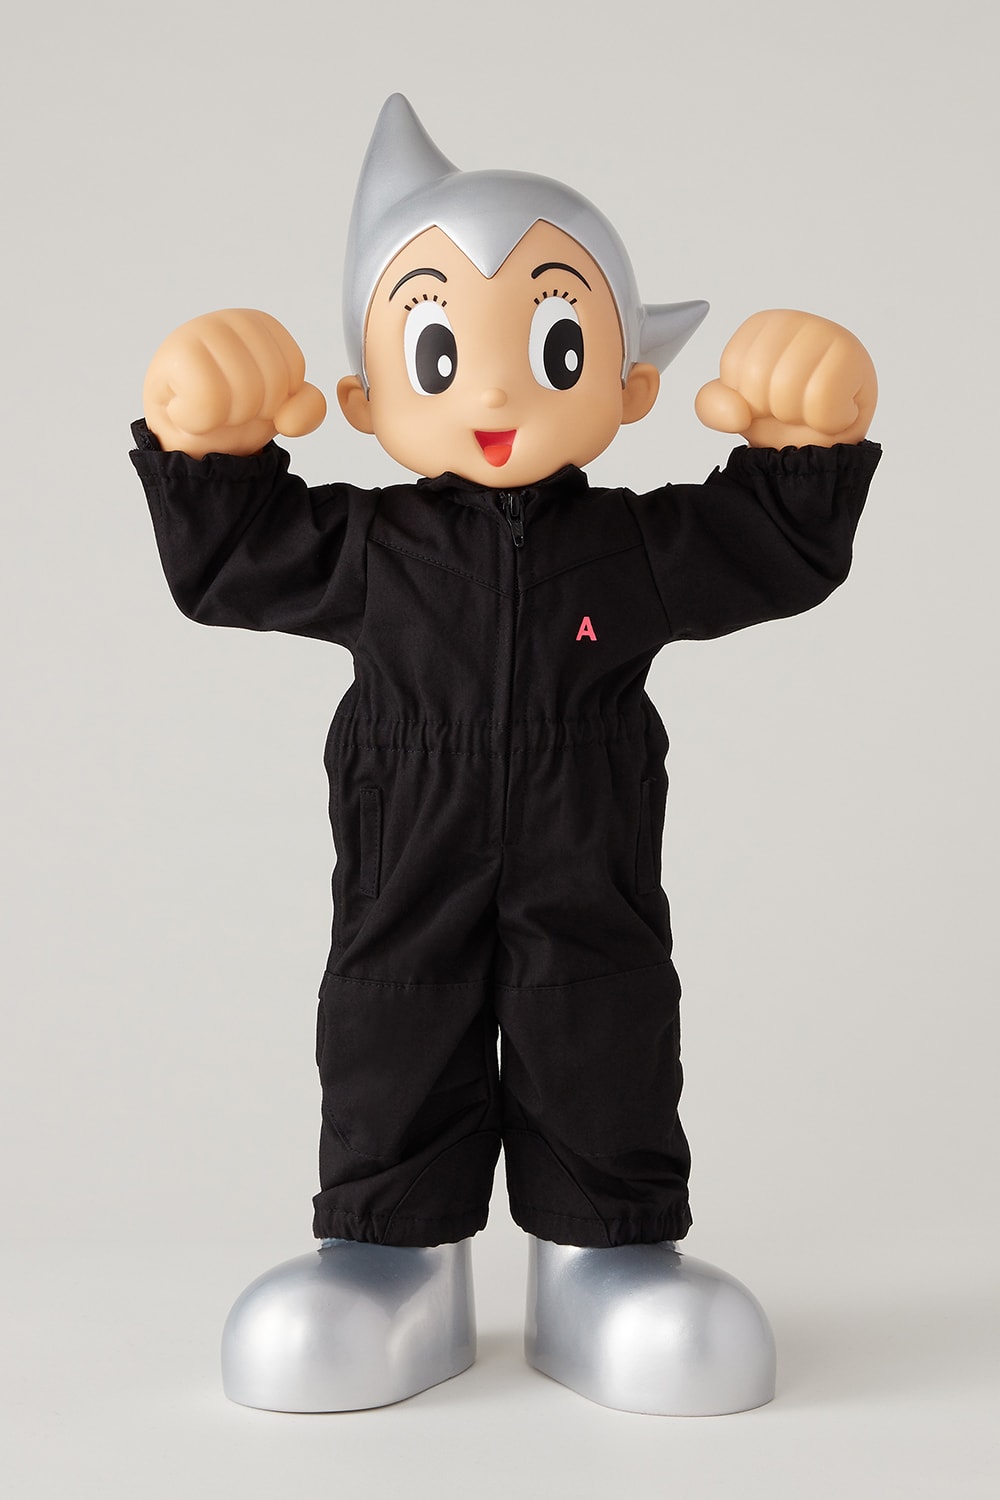 BAIT AMBUSH ASTRO BOY AMBUSH Figure Release Info Date Buy Price YOON Ahn Osamu Tezuka Verbal